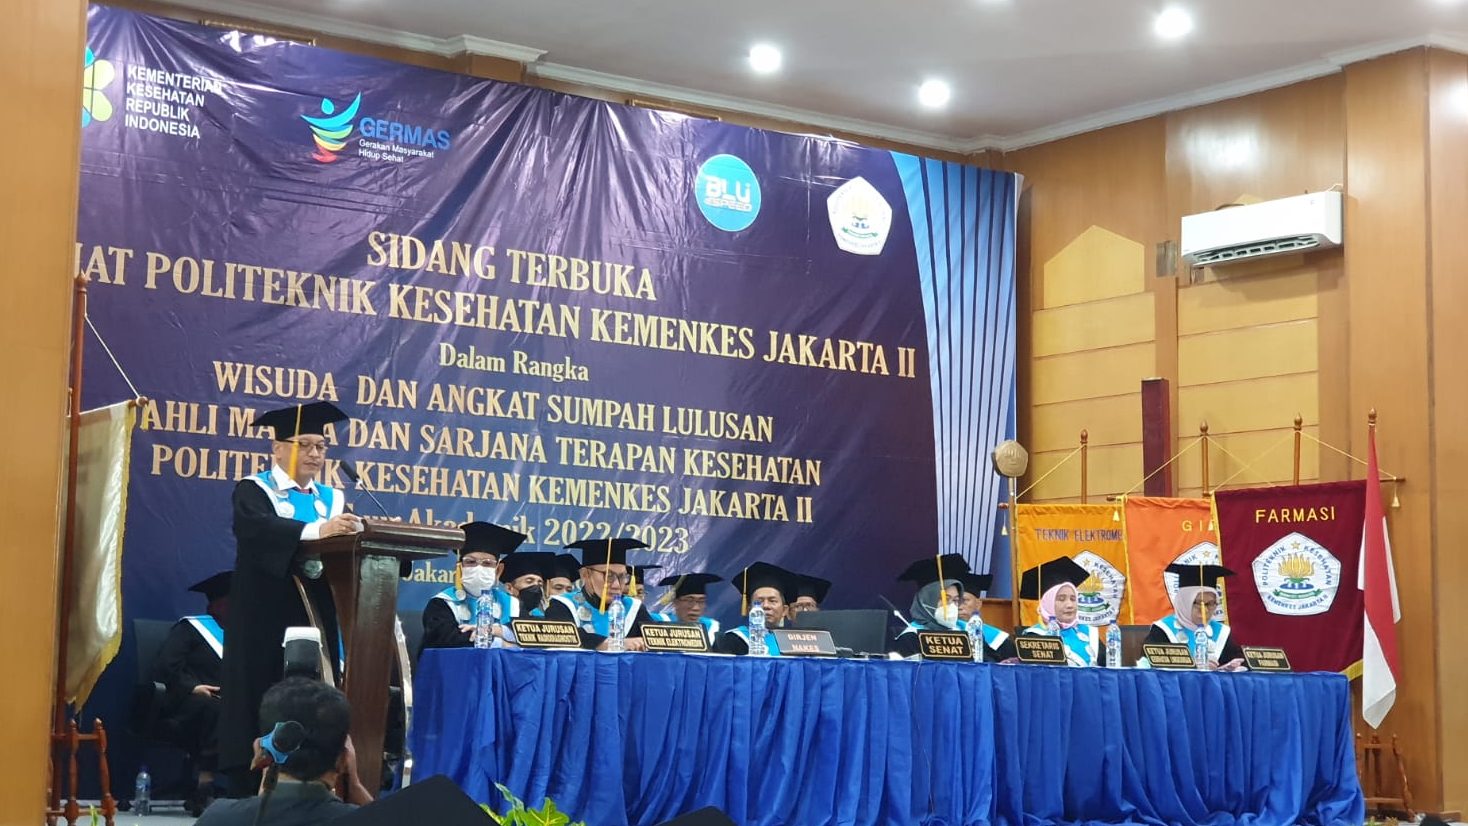 Poltekkes Kemenkes Jakarta II Gelar Wisuda, Angkat Sumpah Lulusan Ahli Madya dan Sarjana Terapan Kesehatan Poltekkes Kemenkes Jakarta II Tahun Akademik 2022/2023